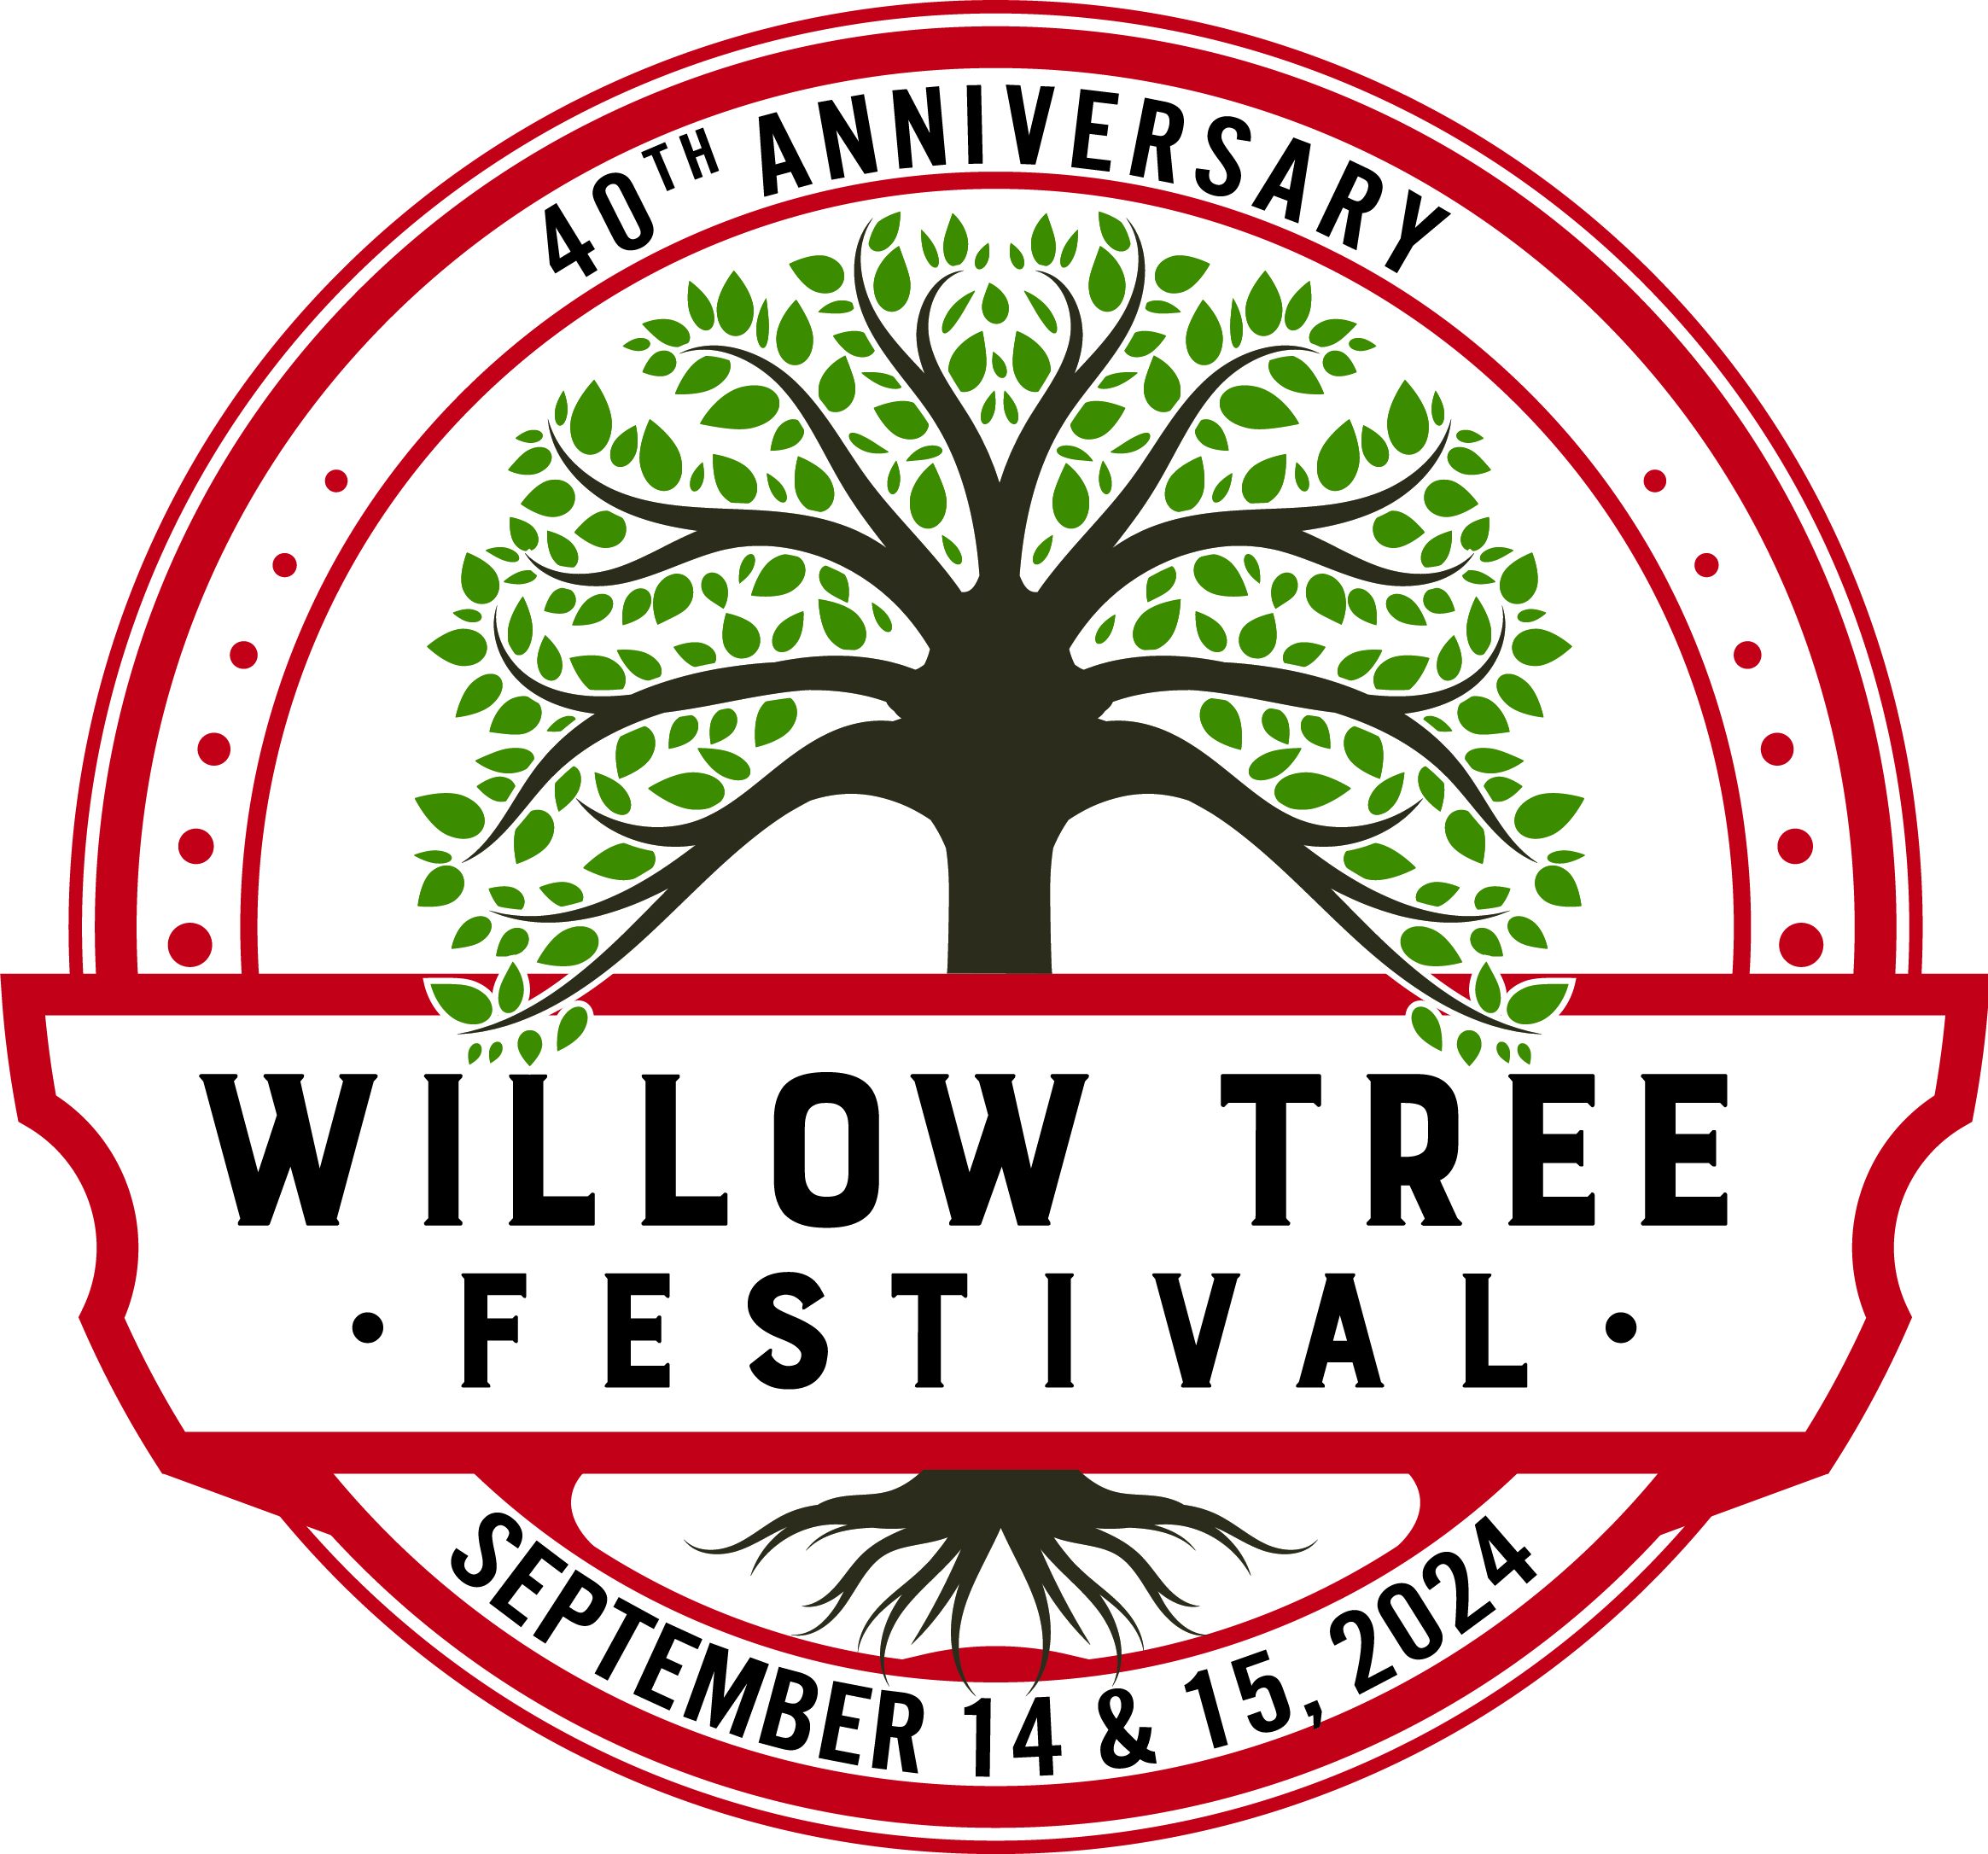 Willow Tree Festival